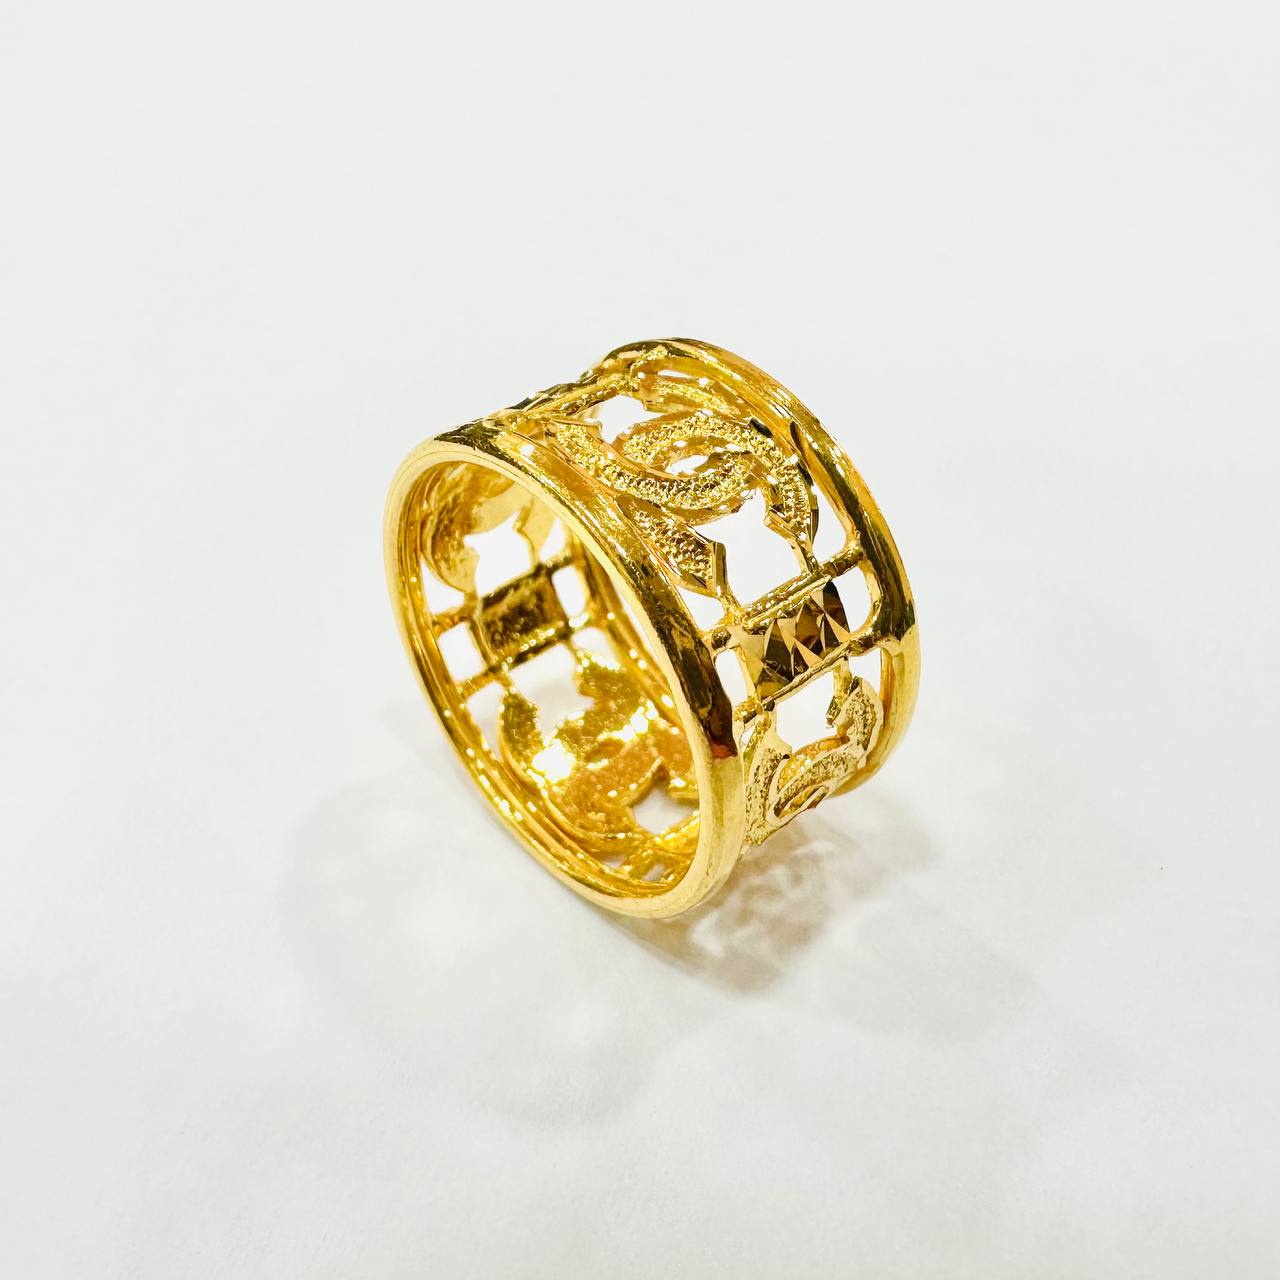 22K / 916 Gold CC Ring-916 gold-Best Gold Shop